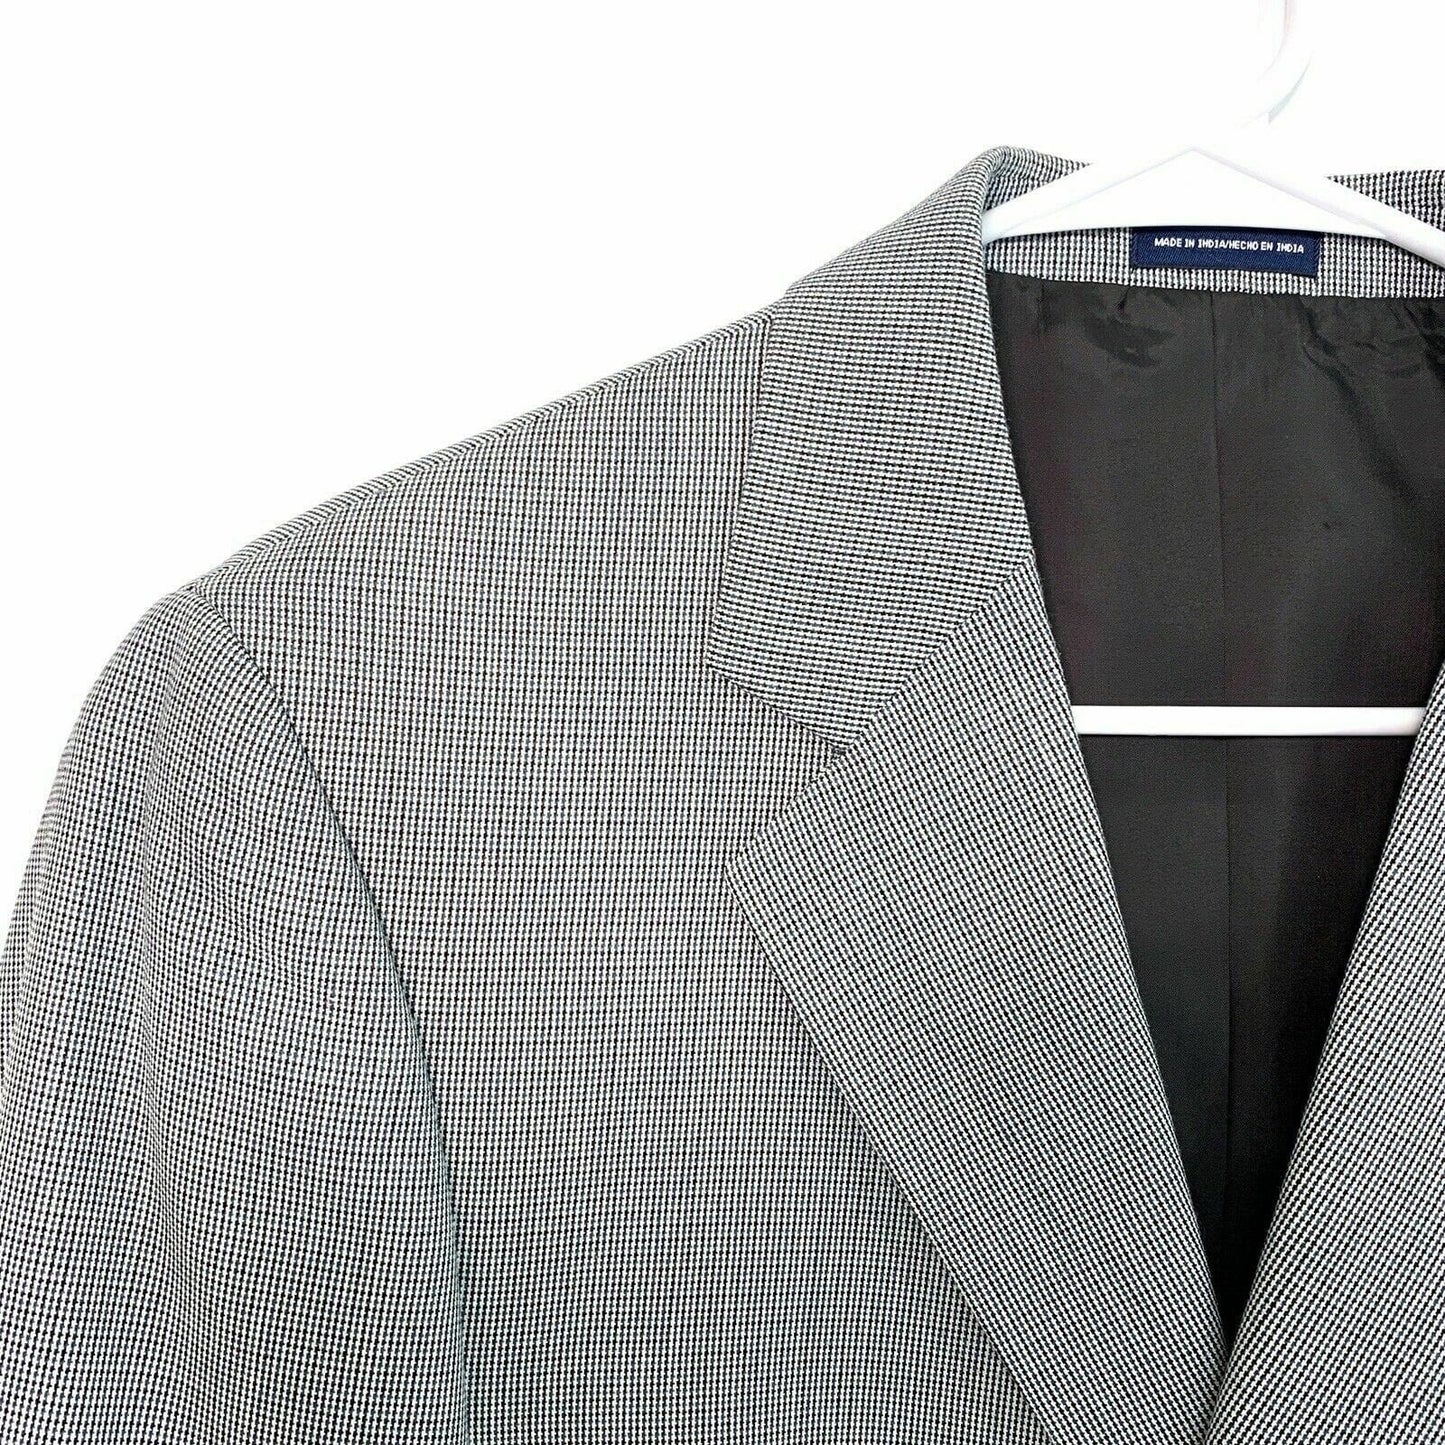 Stafford Essentials Mens Blazer Jacket Sport Coat, Gray Houndstooth - Size 40R